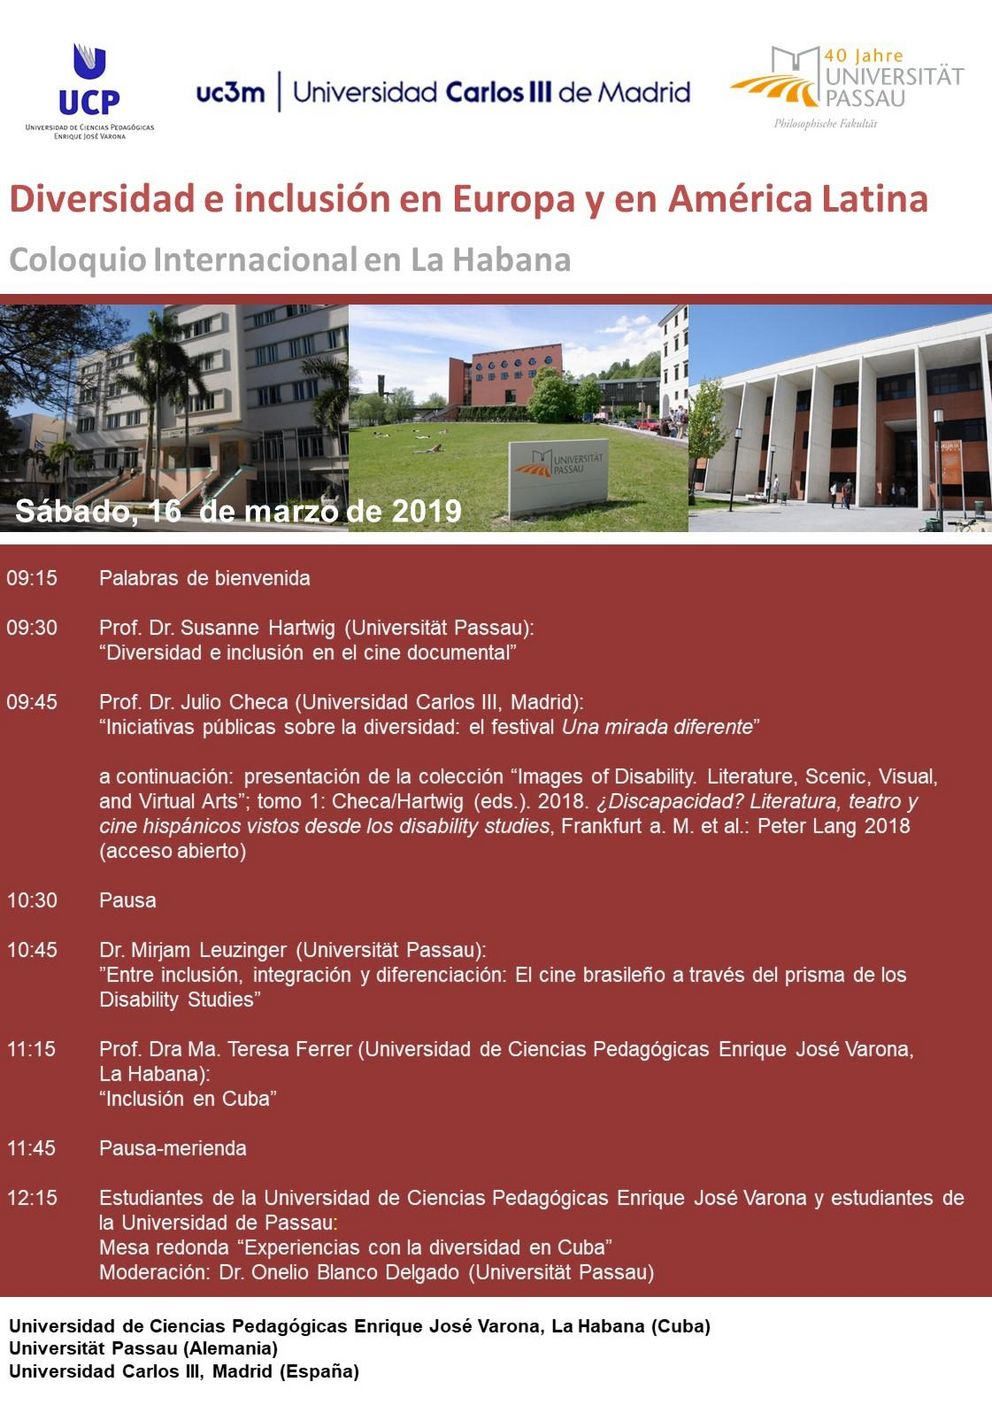 Plakat zum Internationalen Kolloquium in Havanna